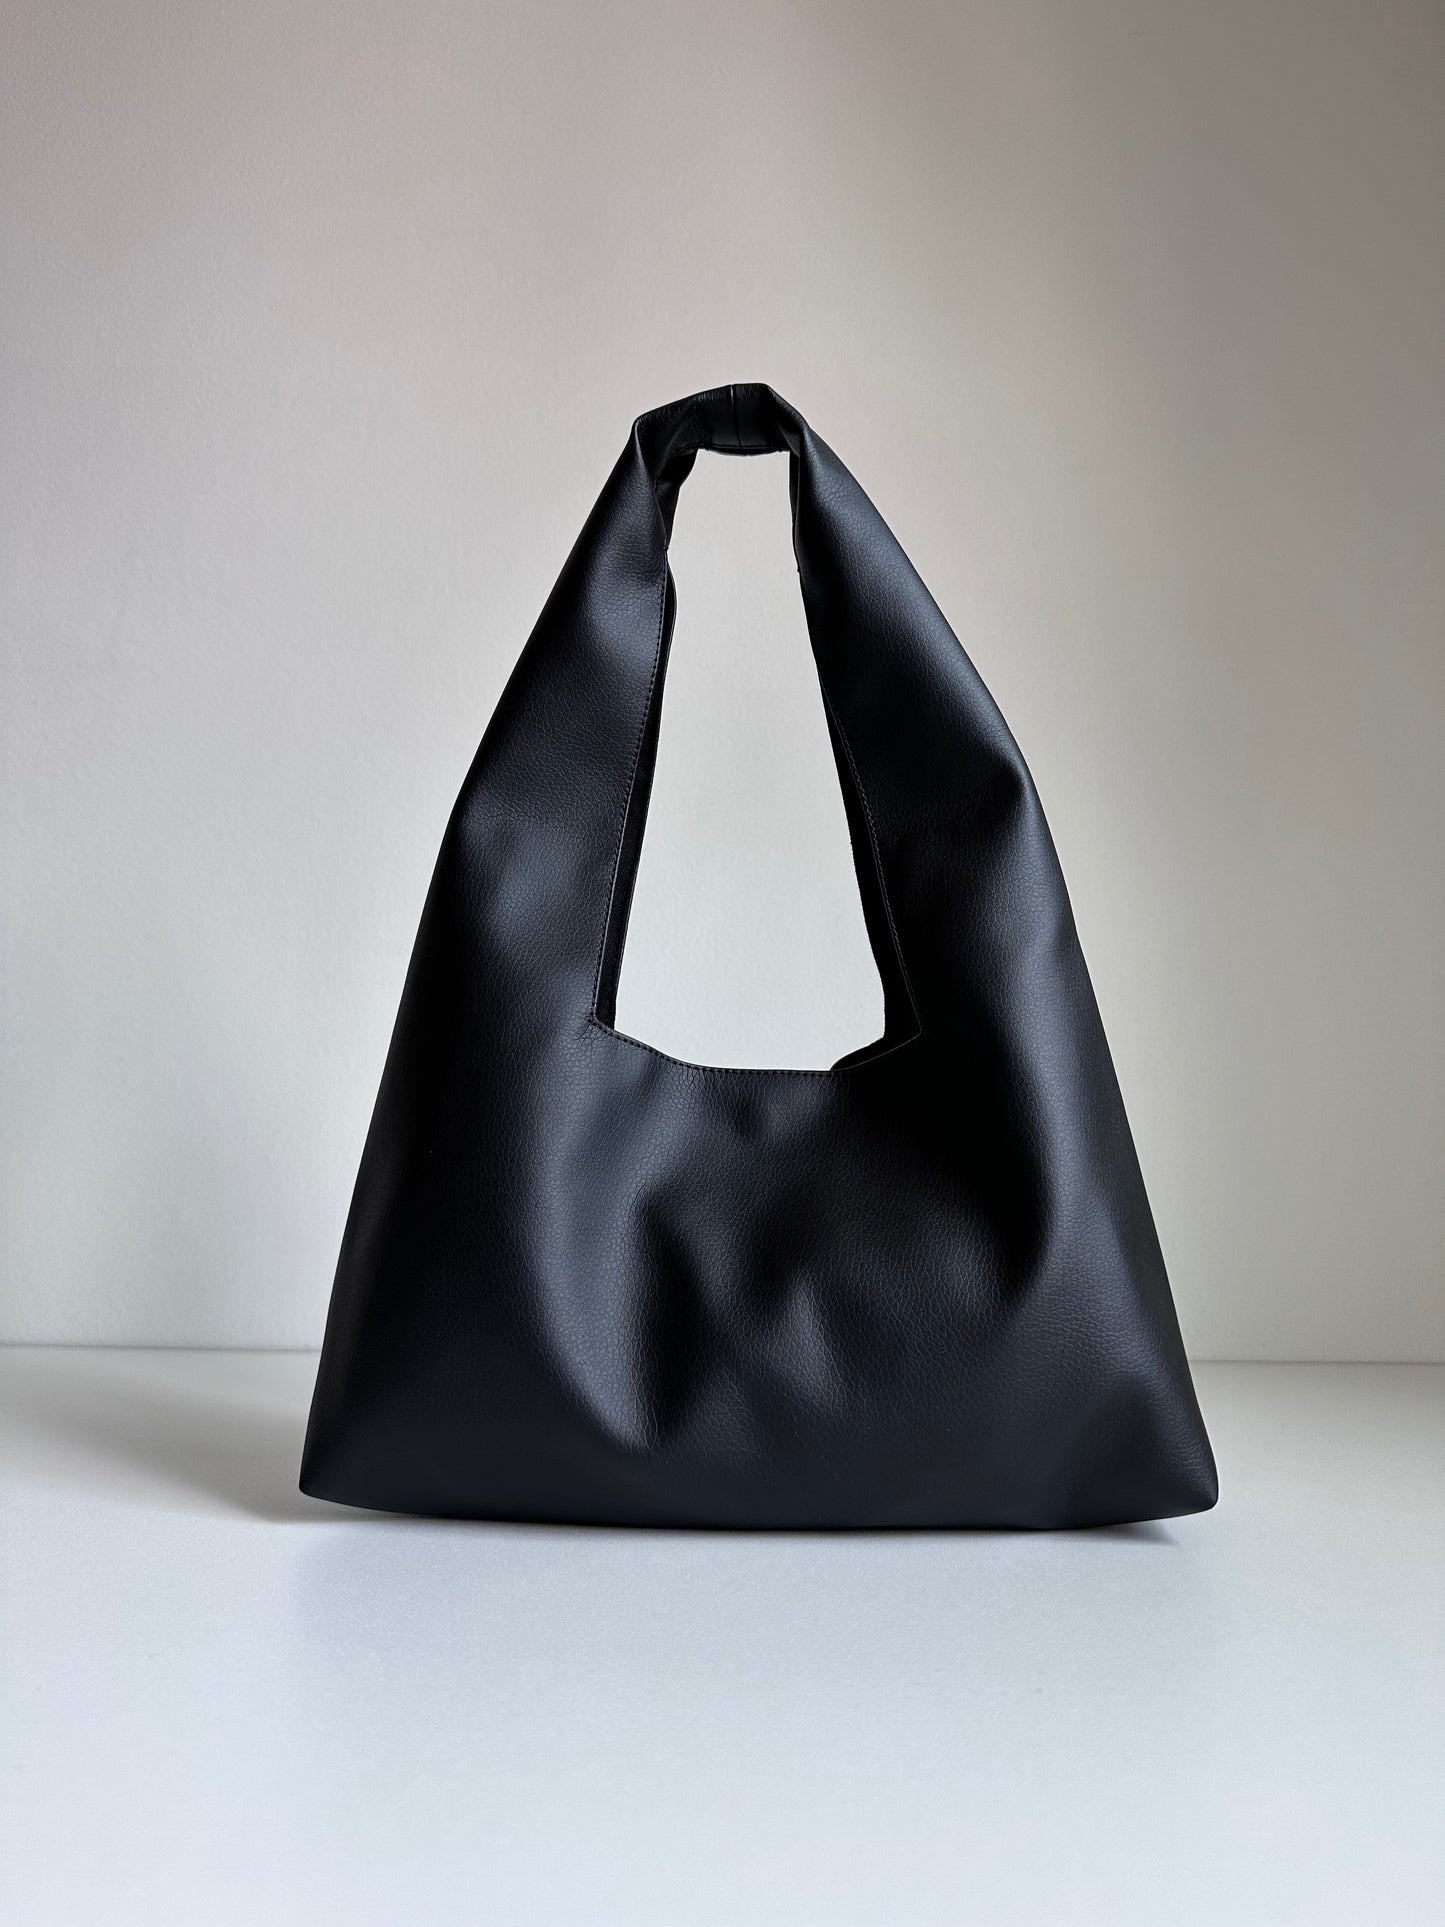 Marlisa Strauss Triangle Bag Black matte